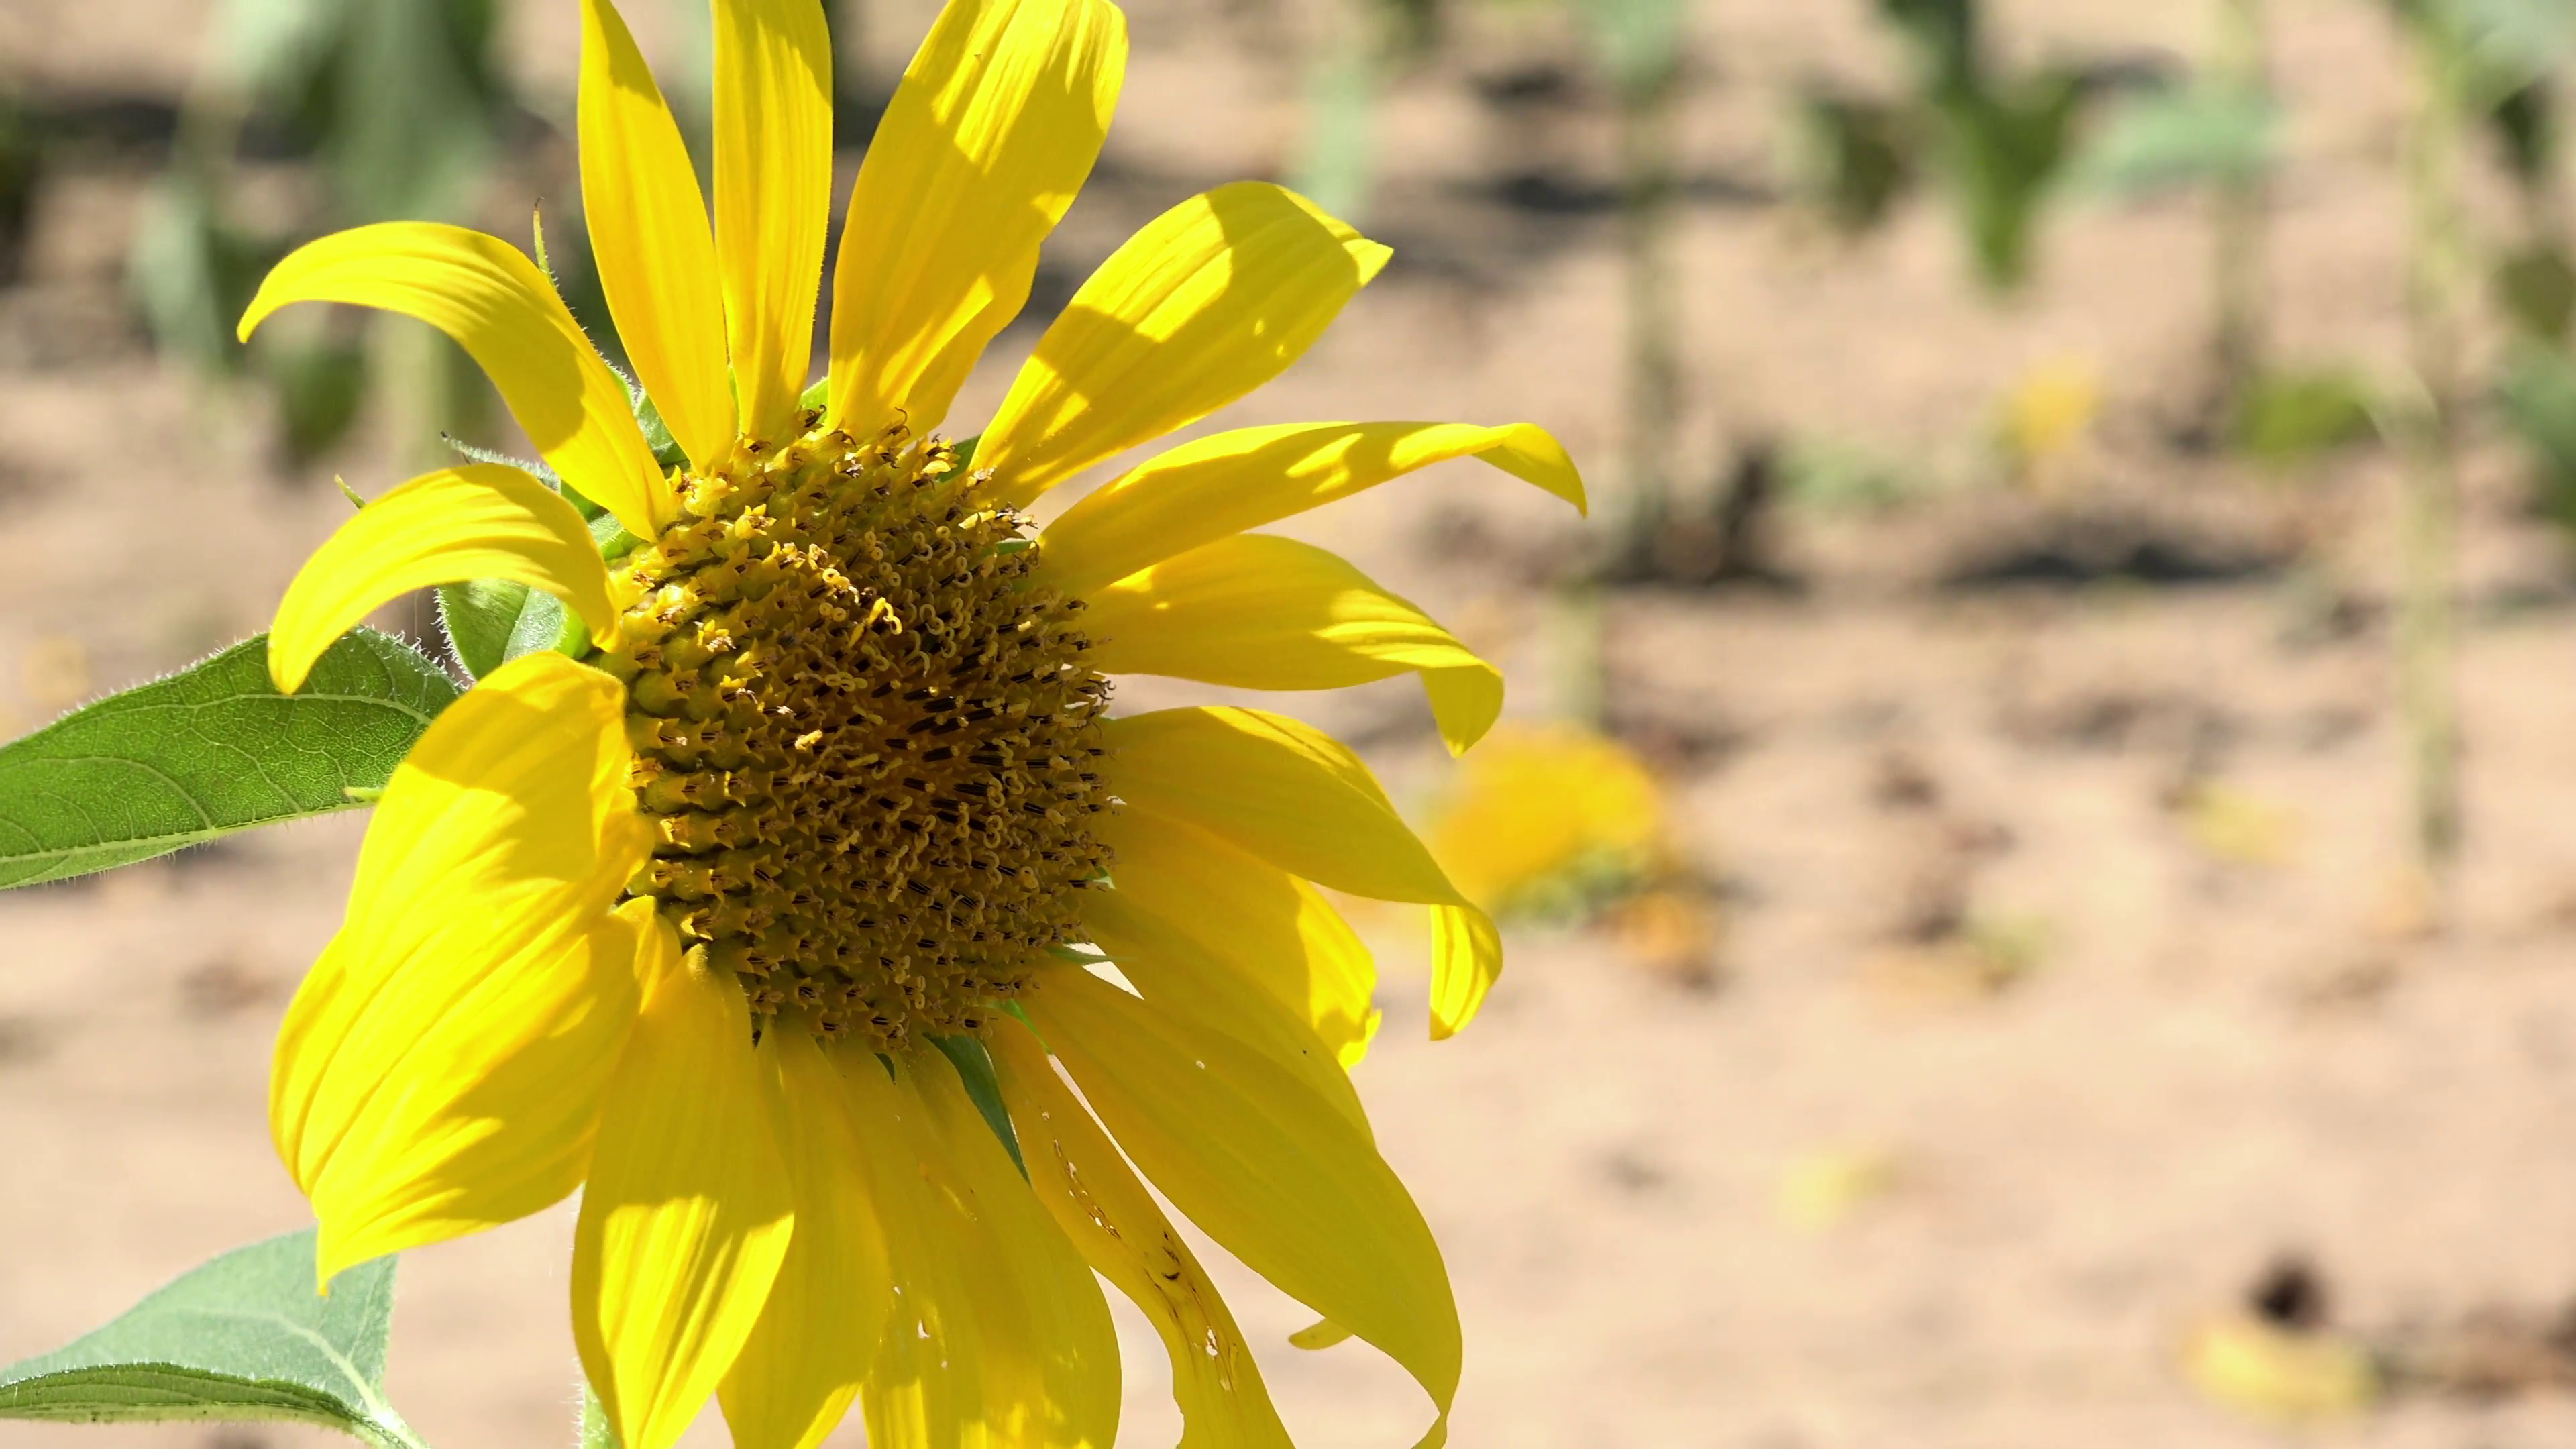 Sunflower on bright sun shining day 4k Stock Video Footage - VideoBlocks